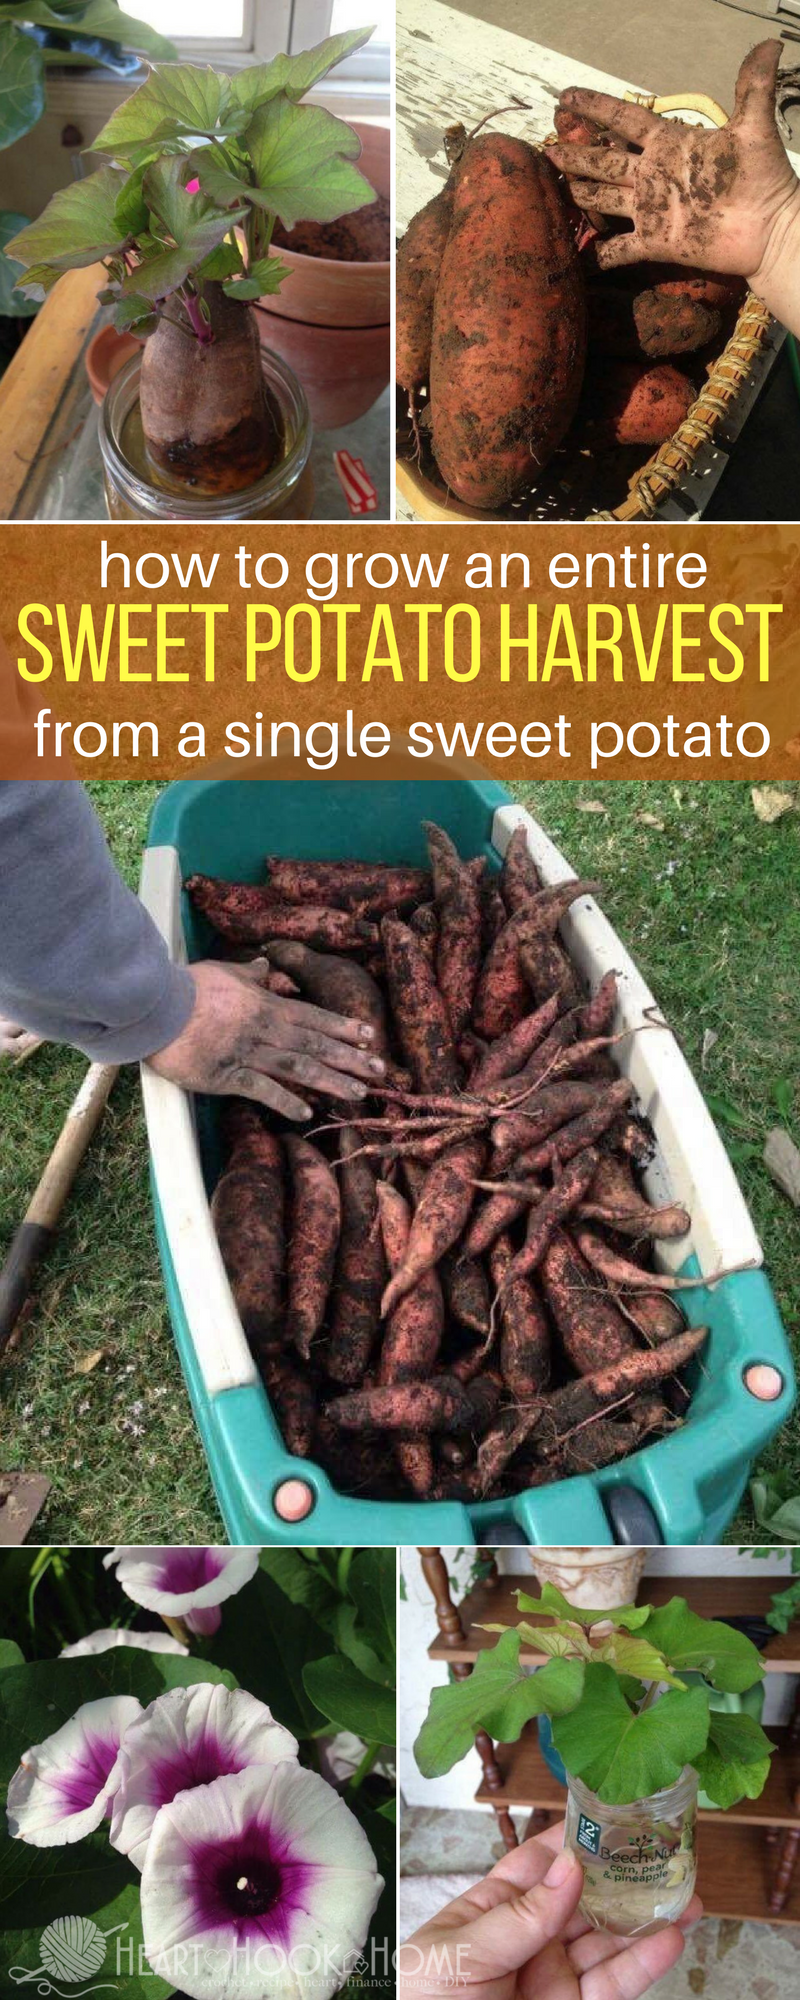 How to Grow Sweet Potatoes from Sweet Potato Slips